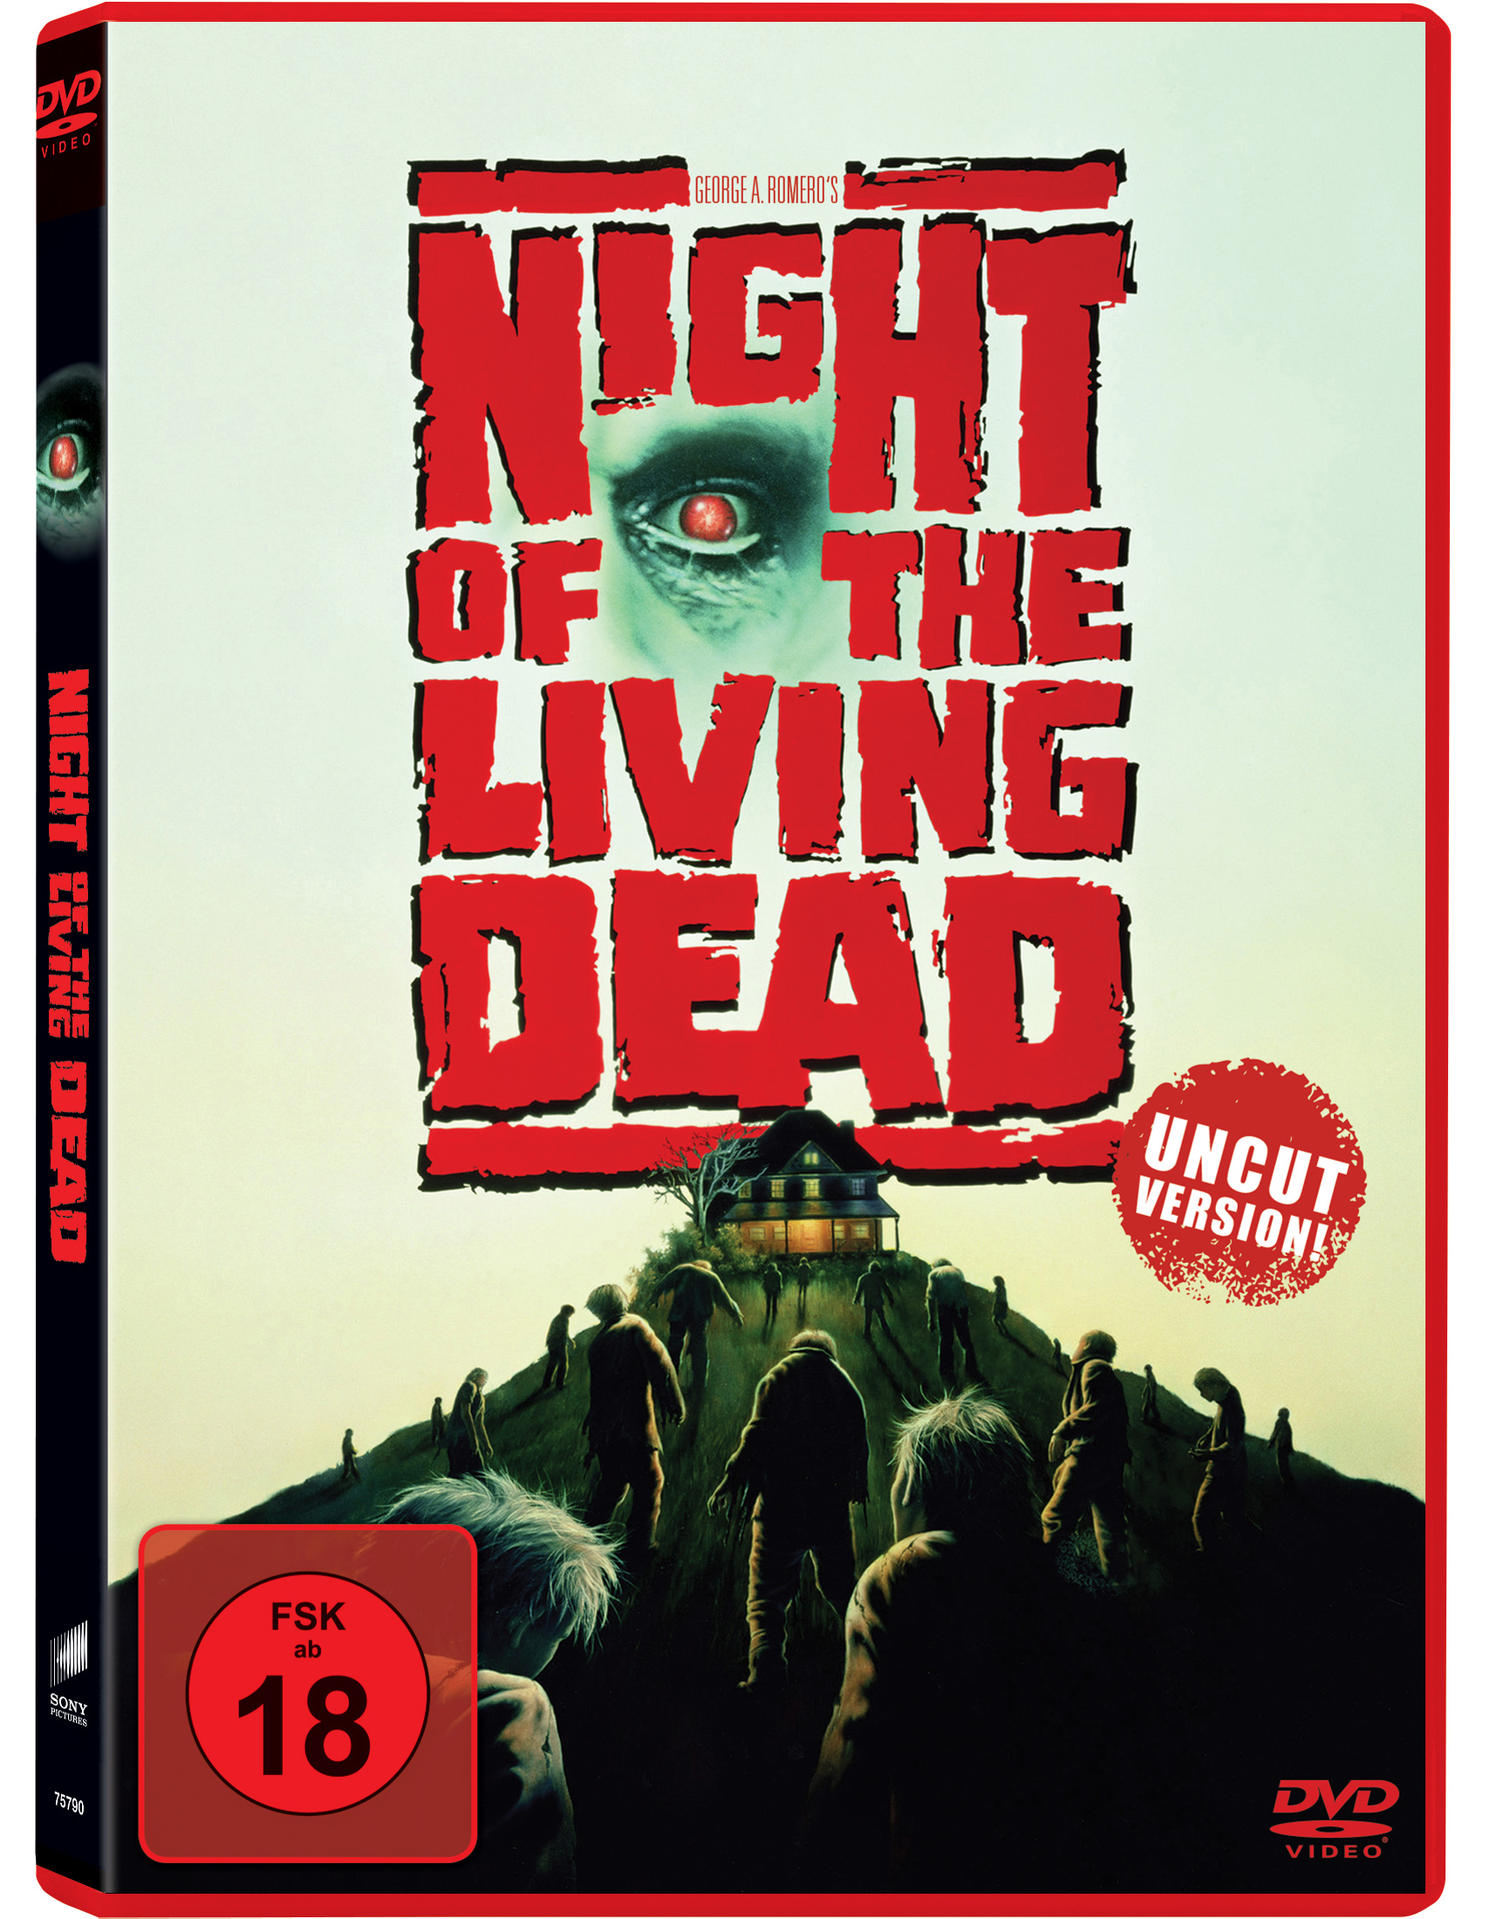 THE KINOFASSUNG) NIGHT (UNCUT LIVING OF DEAD DVD